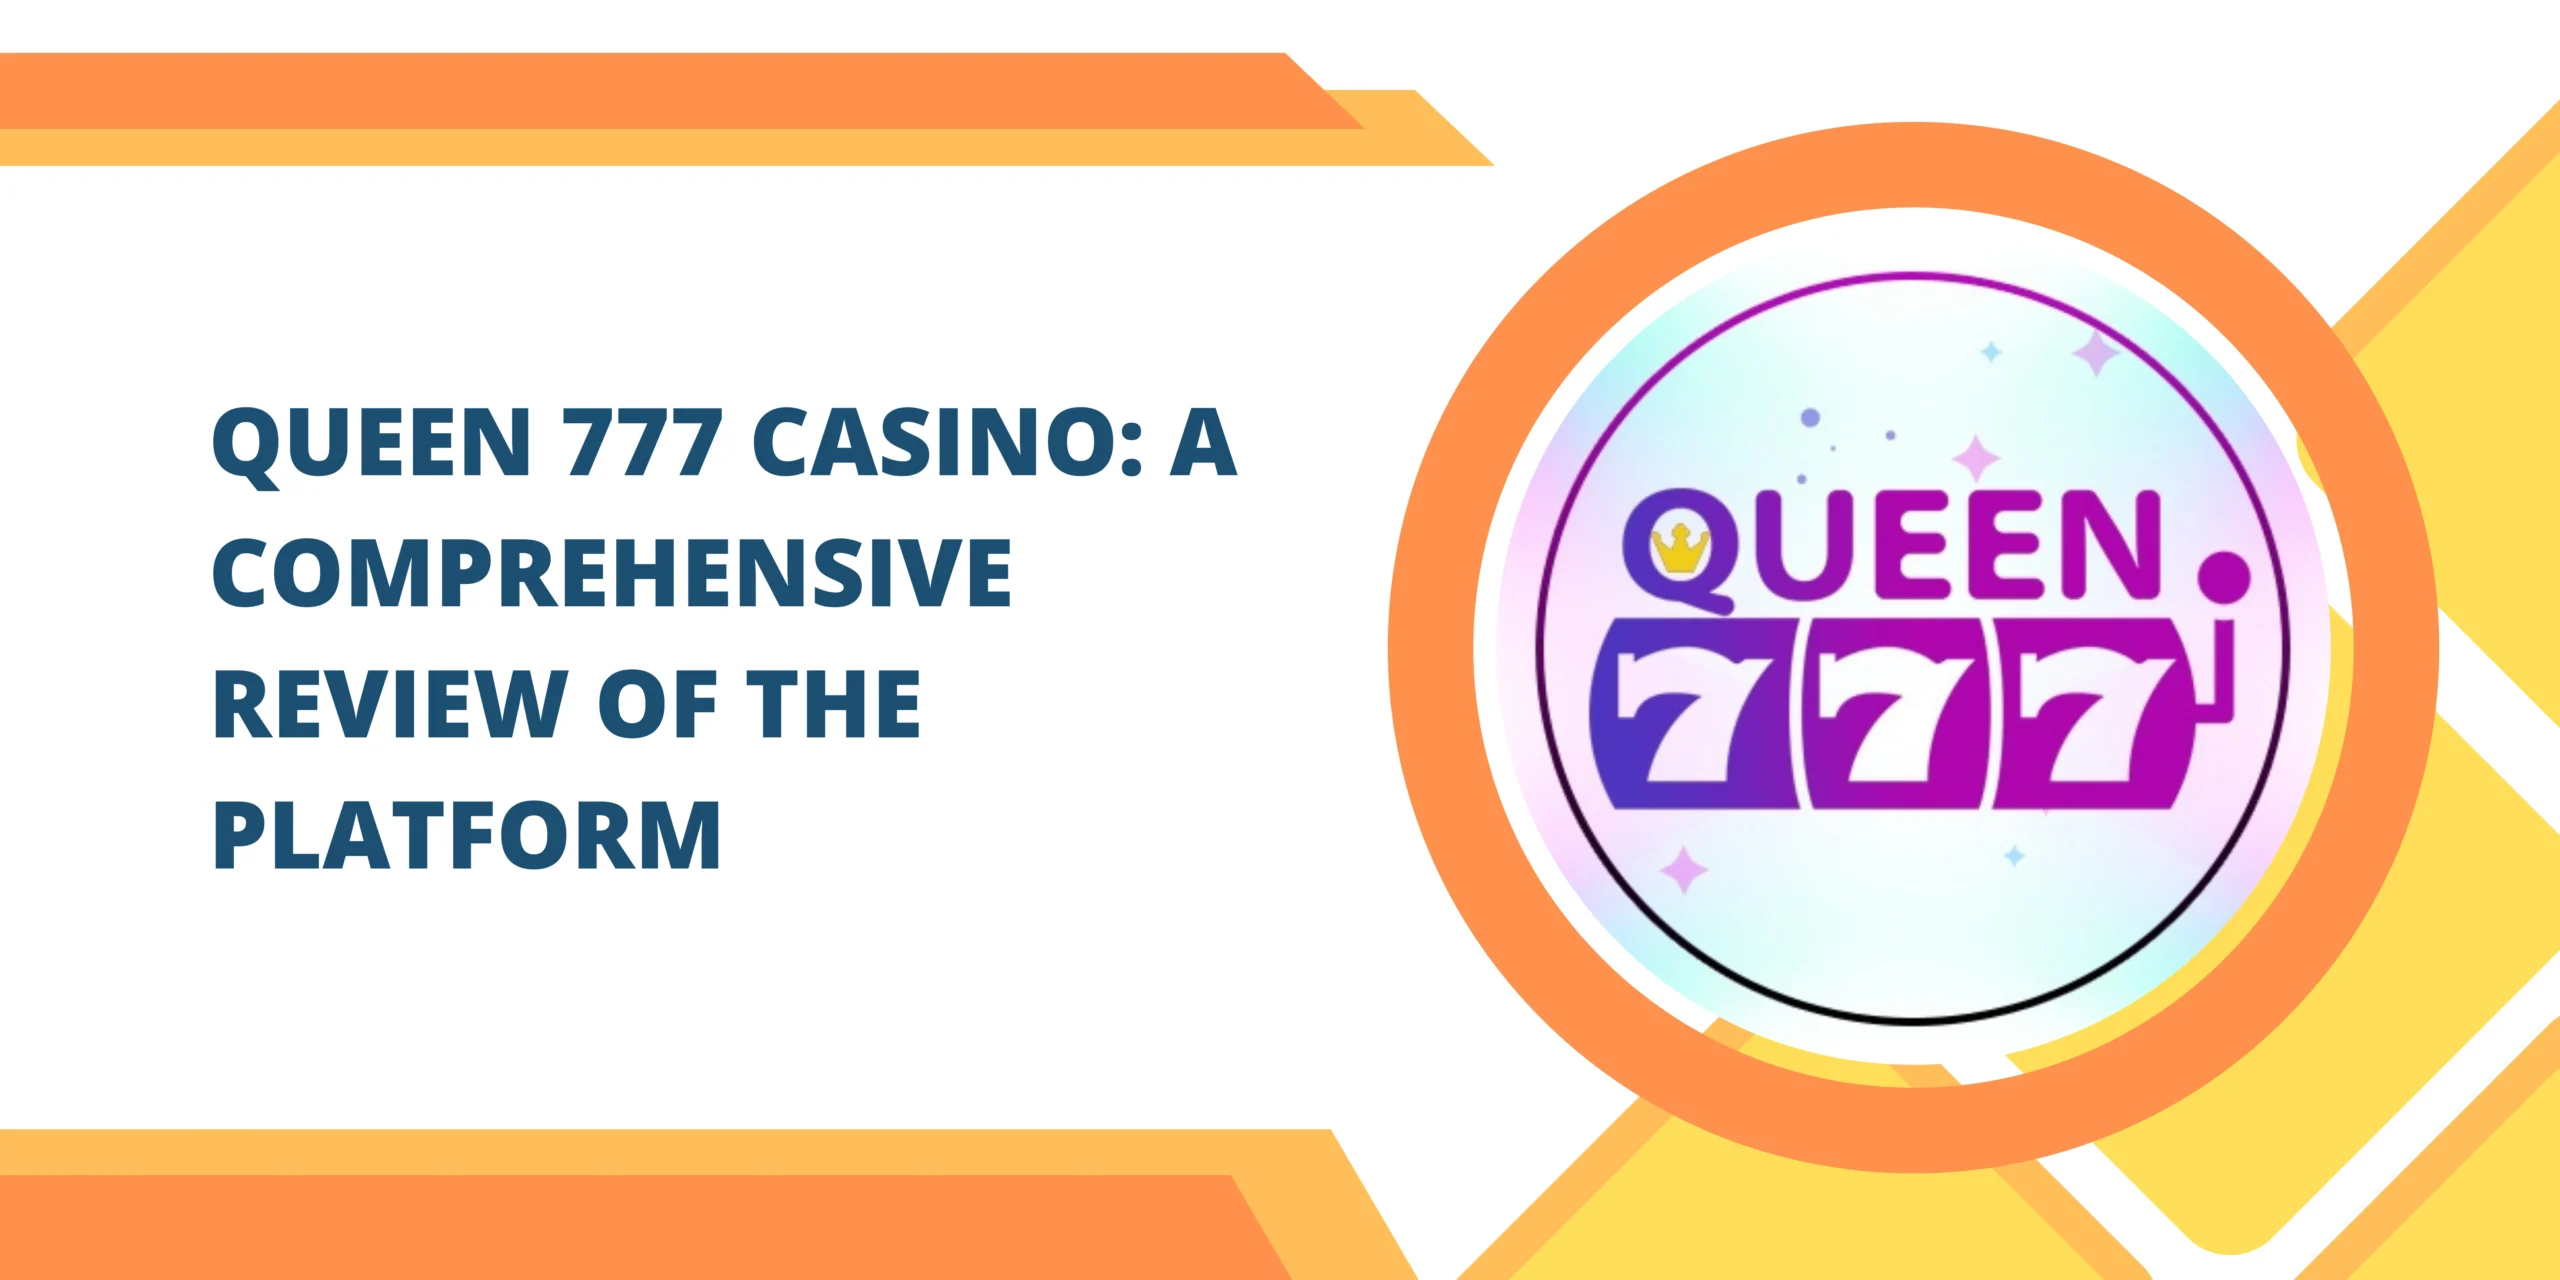 Queen 777 Casino: A Comprehensive Review of the Platform